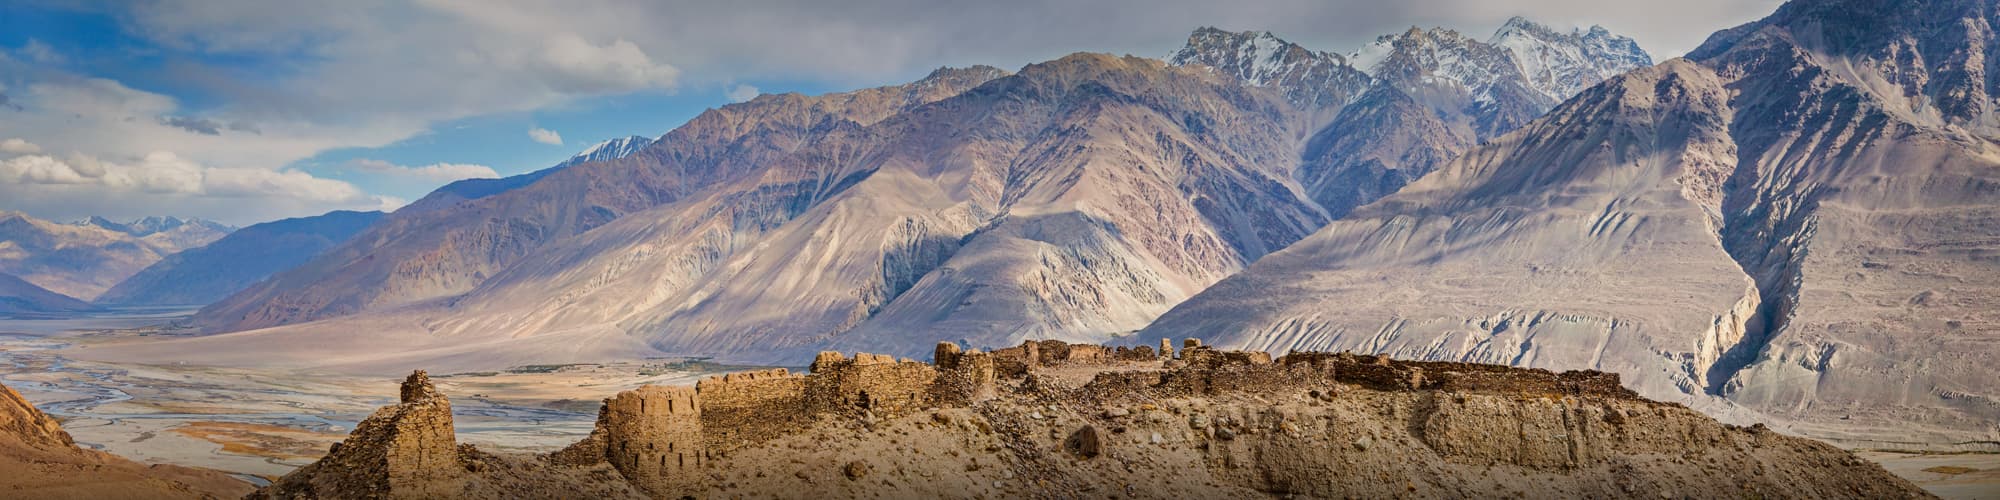 Trek au Tadjikistan : circuit, randonnée et voyage © Master-c / Istock